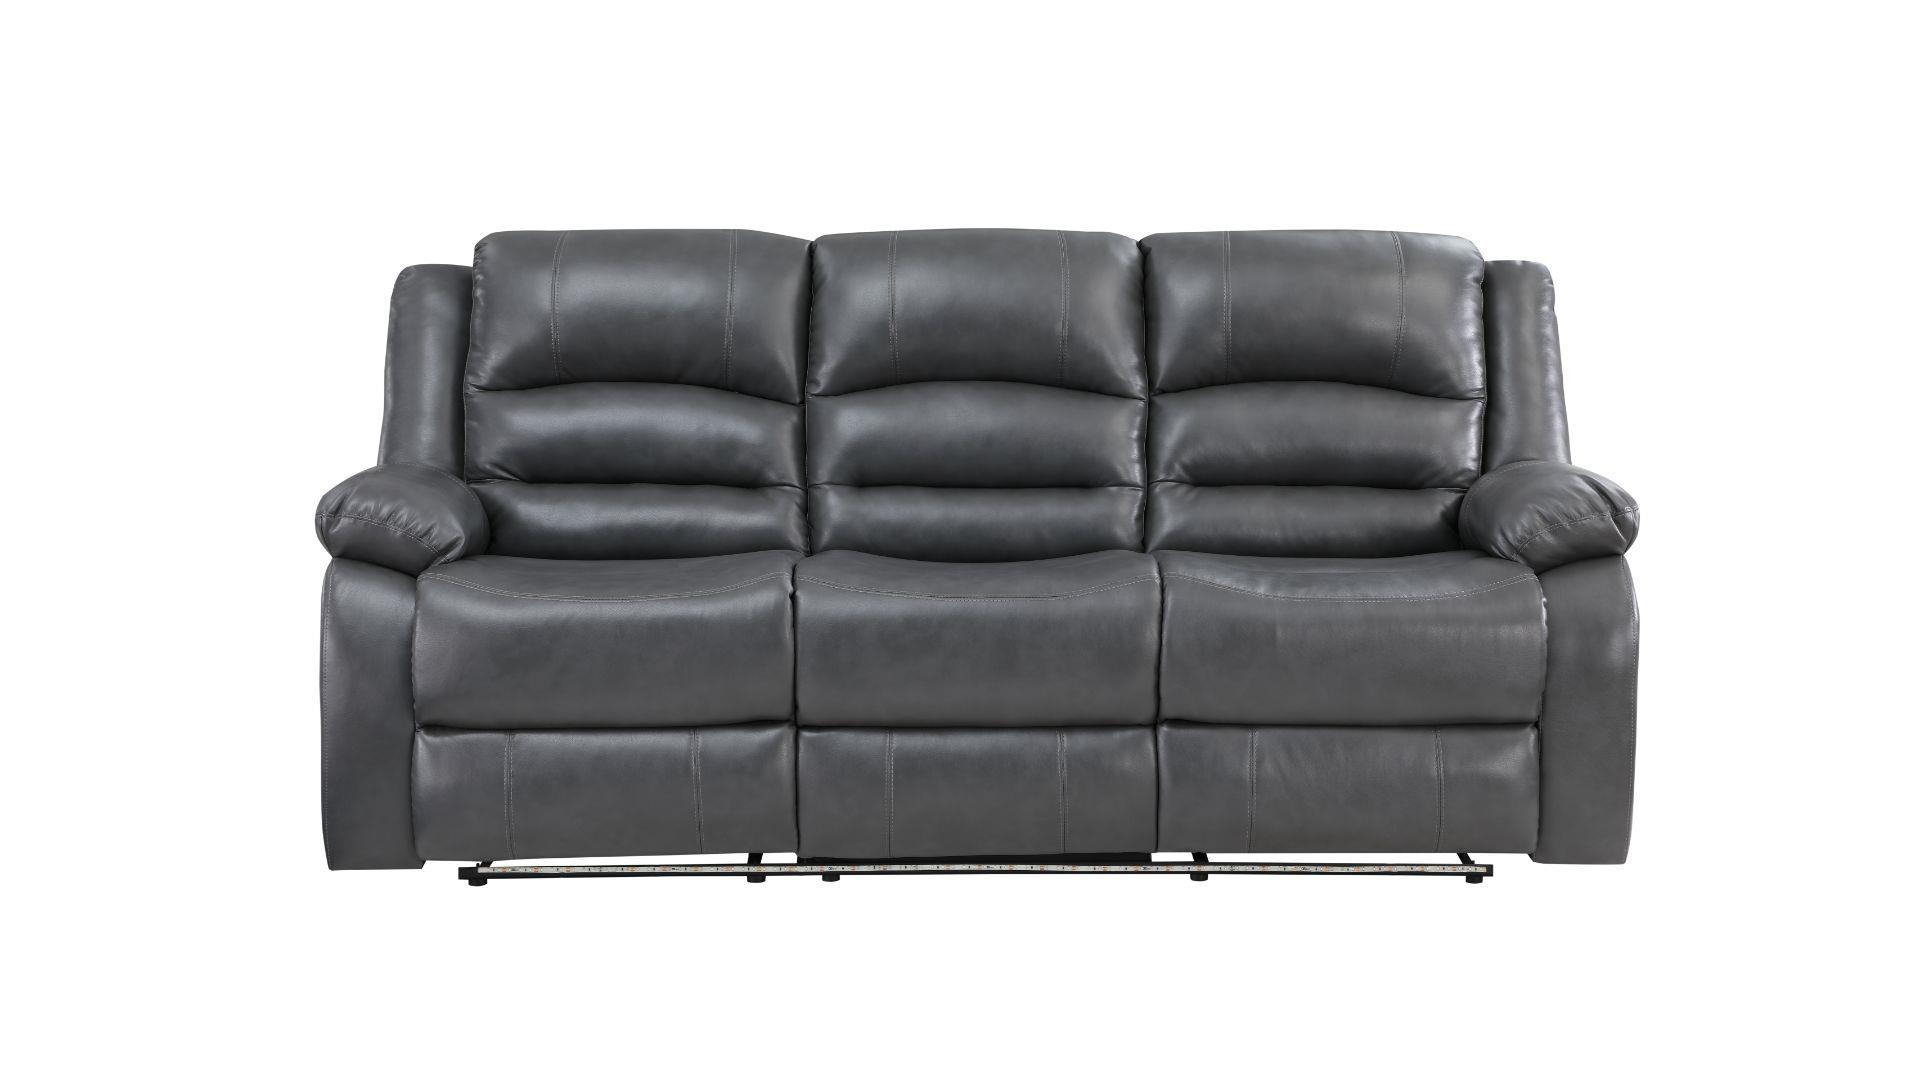 Galaxy Home Furniture MARTIN GR Recliner Sofa